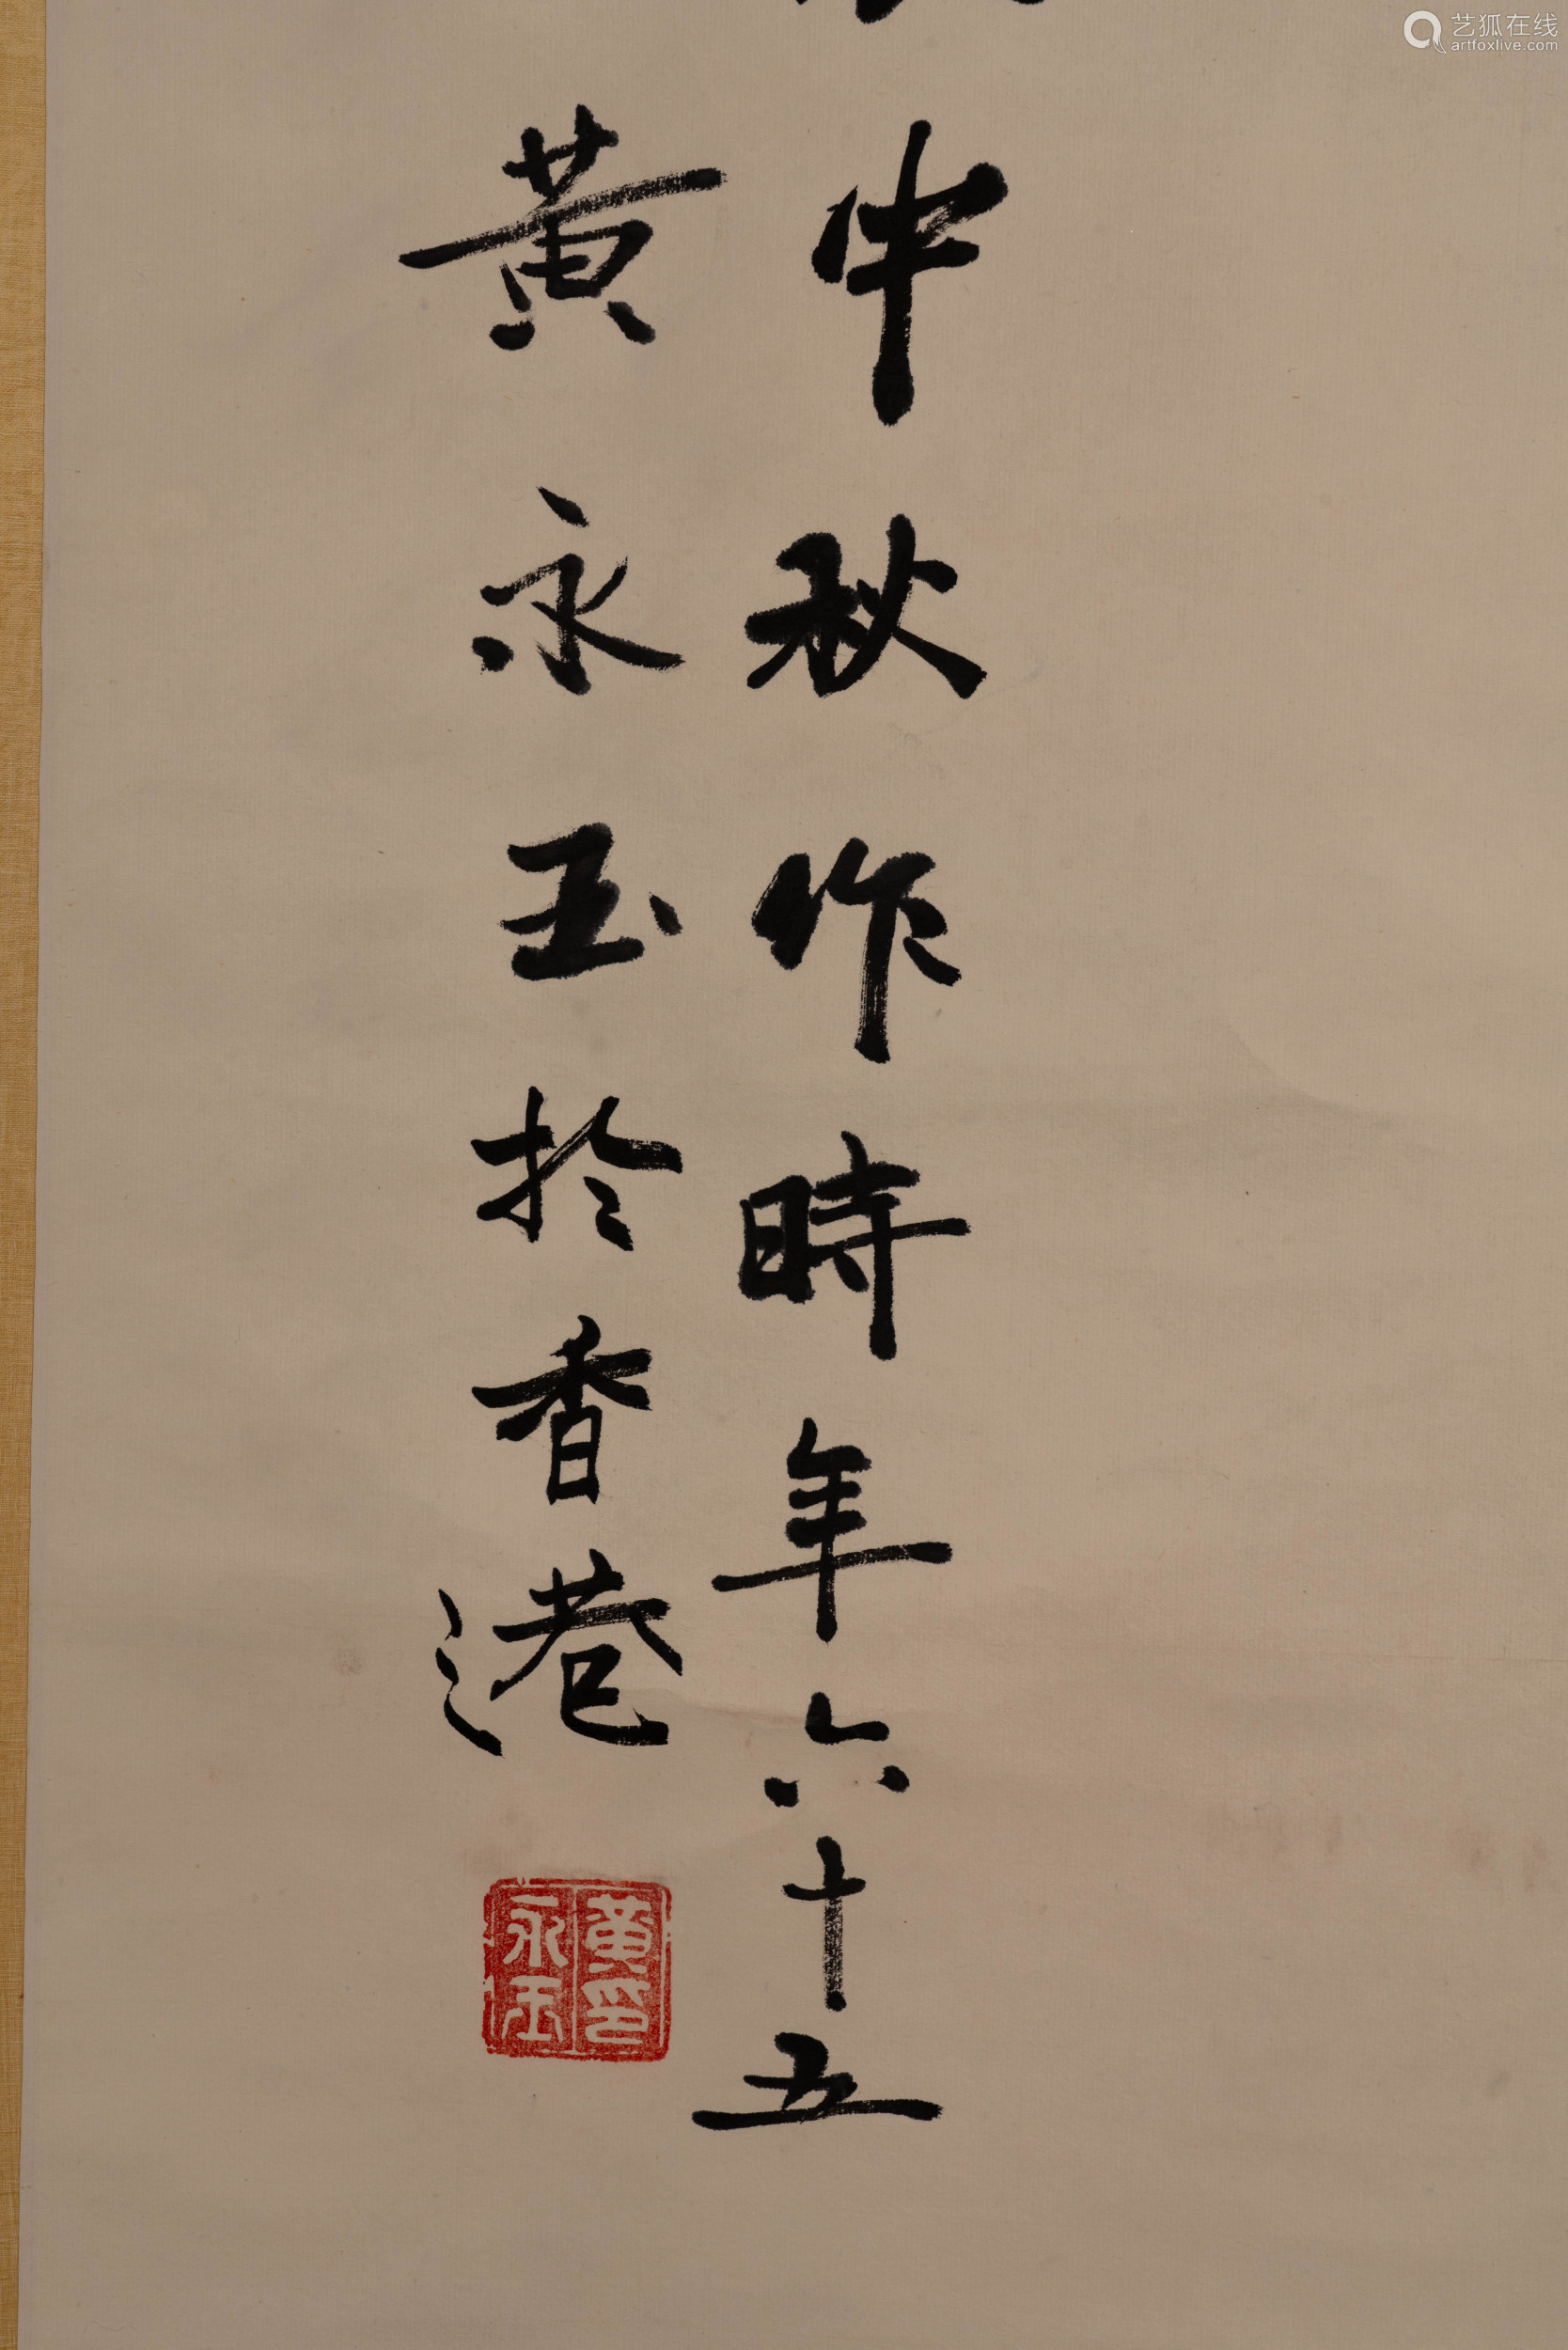 Huang Yongyu's character vertical scroll